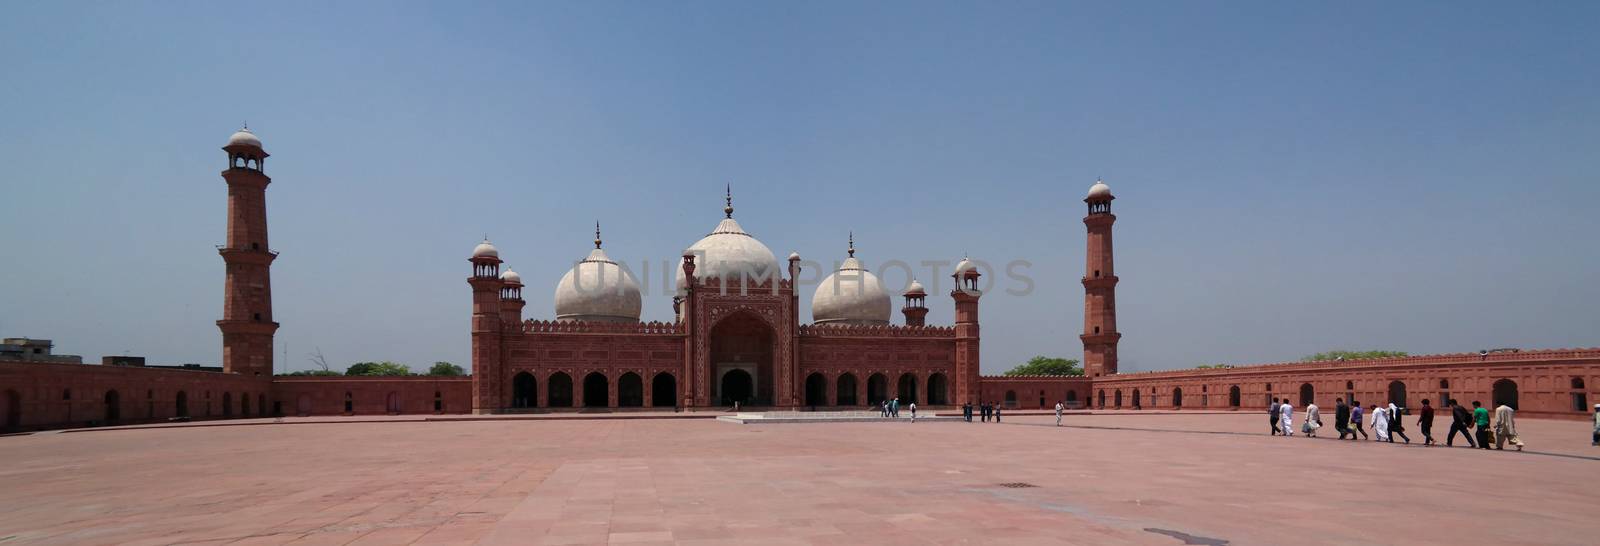 Prayer Hall of Badshahi or Imperial Mosque, Lahore Pakistan by homocosmicos